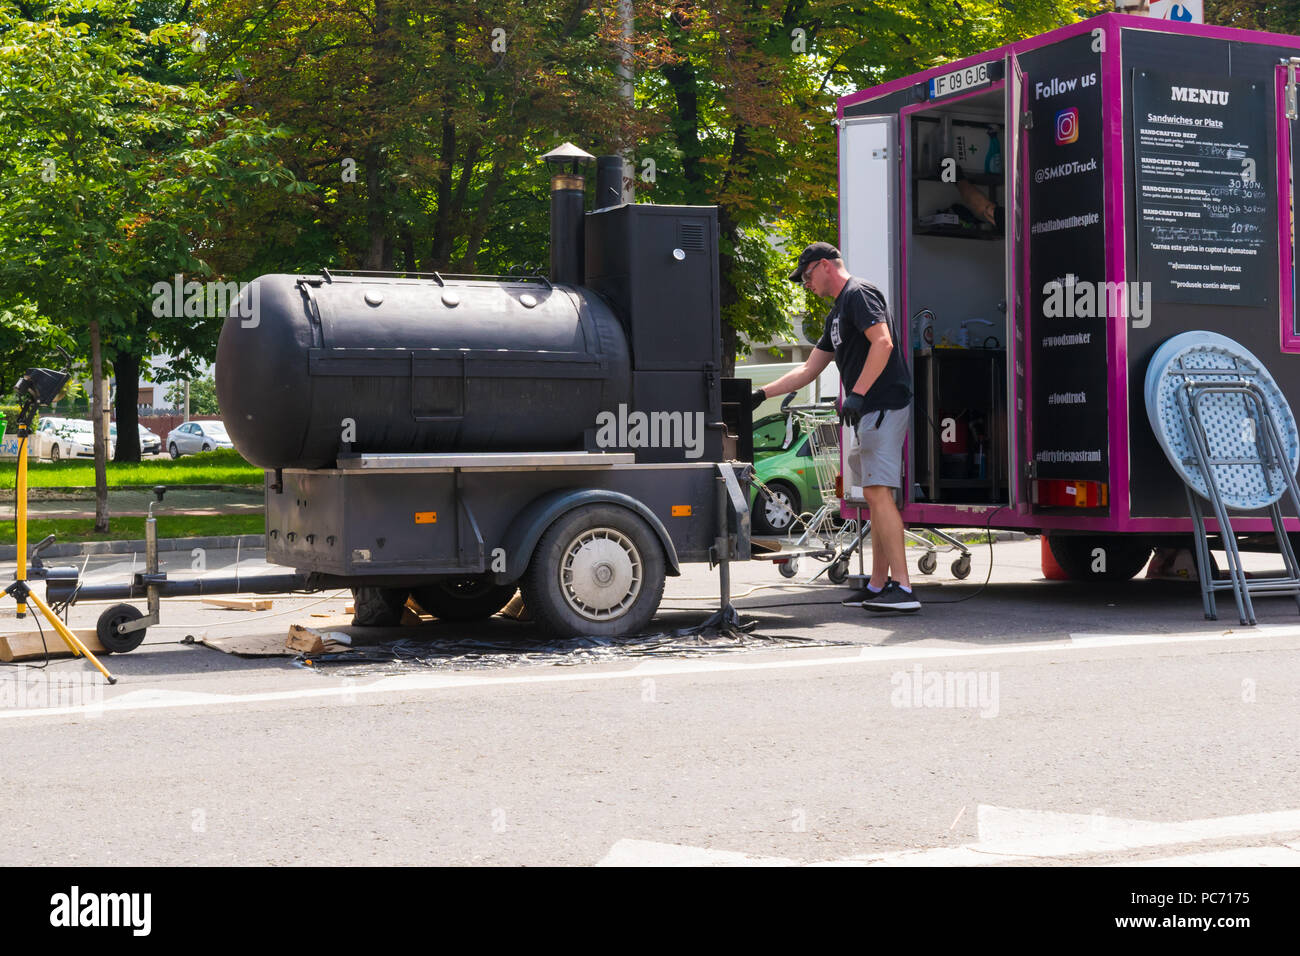 Ploiesti, Romania - July 14, 2018: Man attends barbecue / oven in shape of train locomotive at The Medieval Festival held in Ploiesti, Prahova, Romani Stock Photo